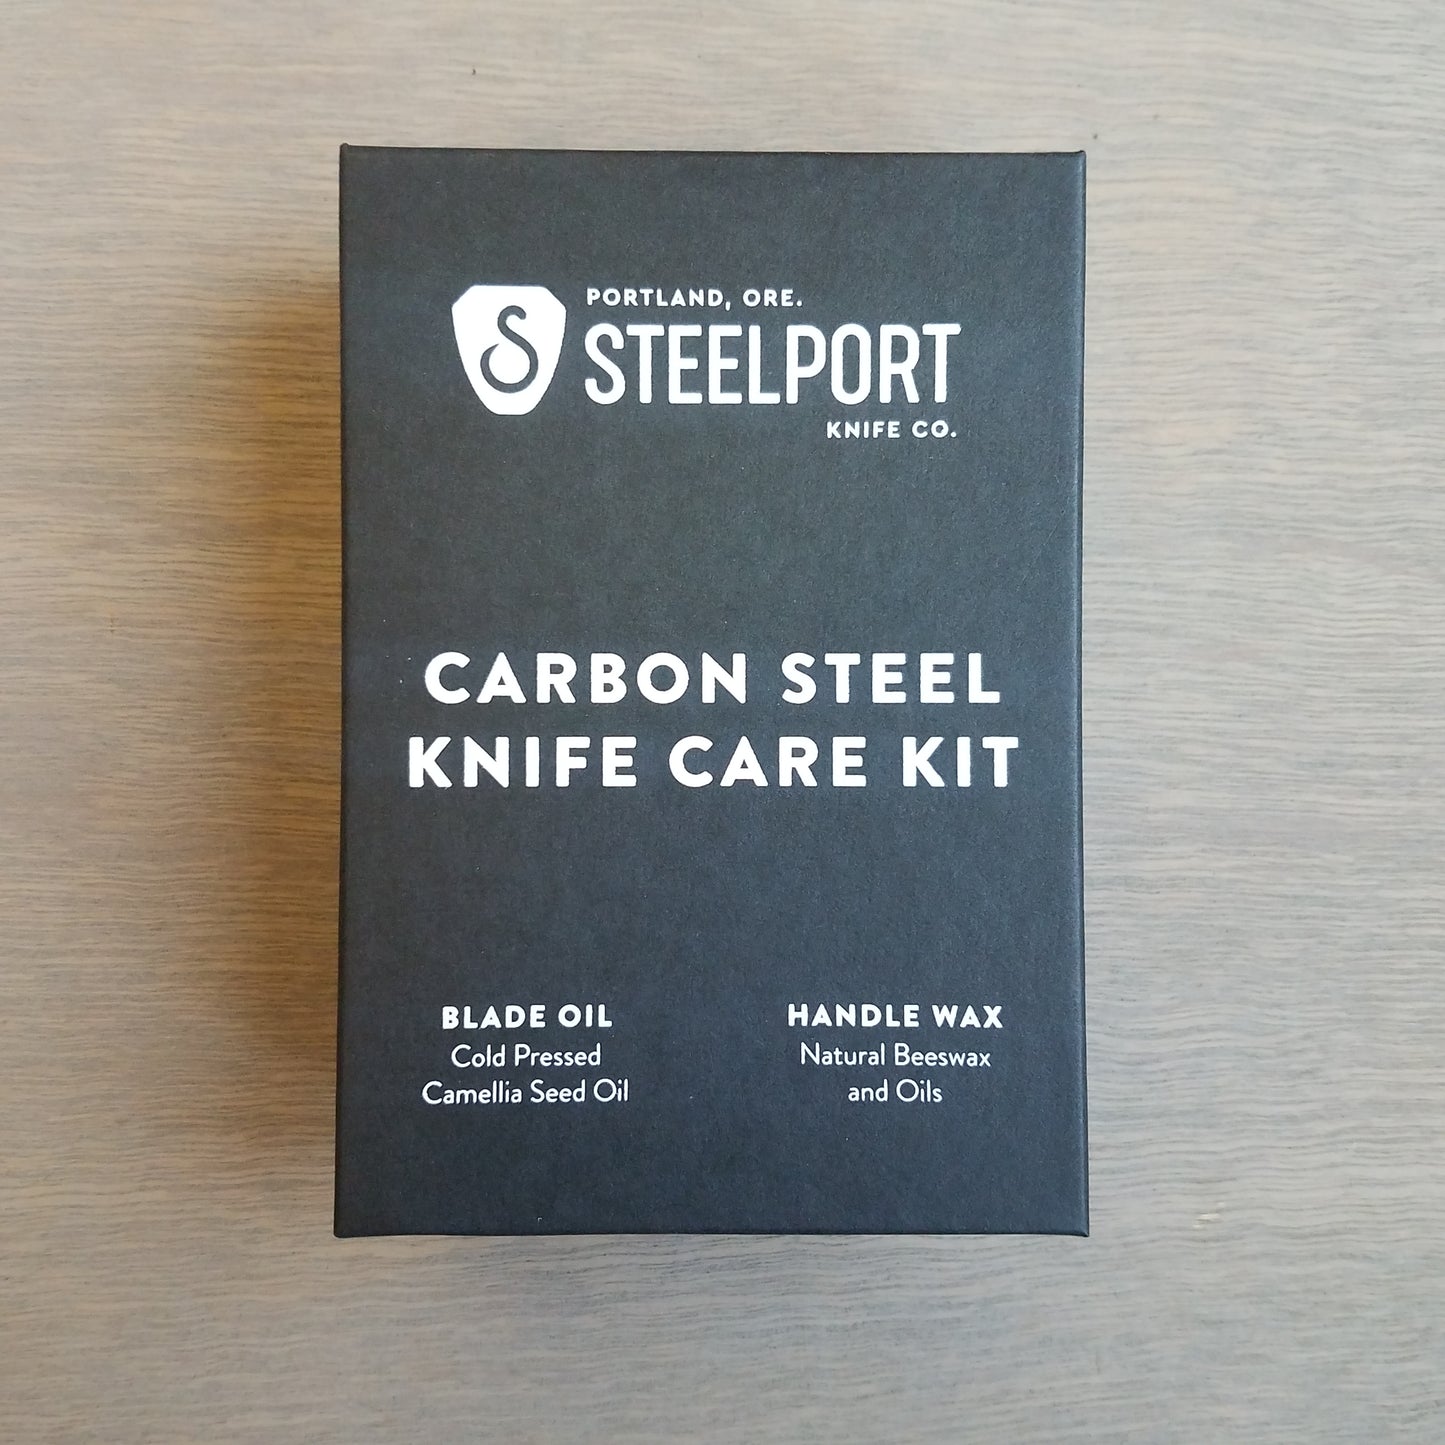 Steelport Knife Co. Carbon Steel Knife Care Kit